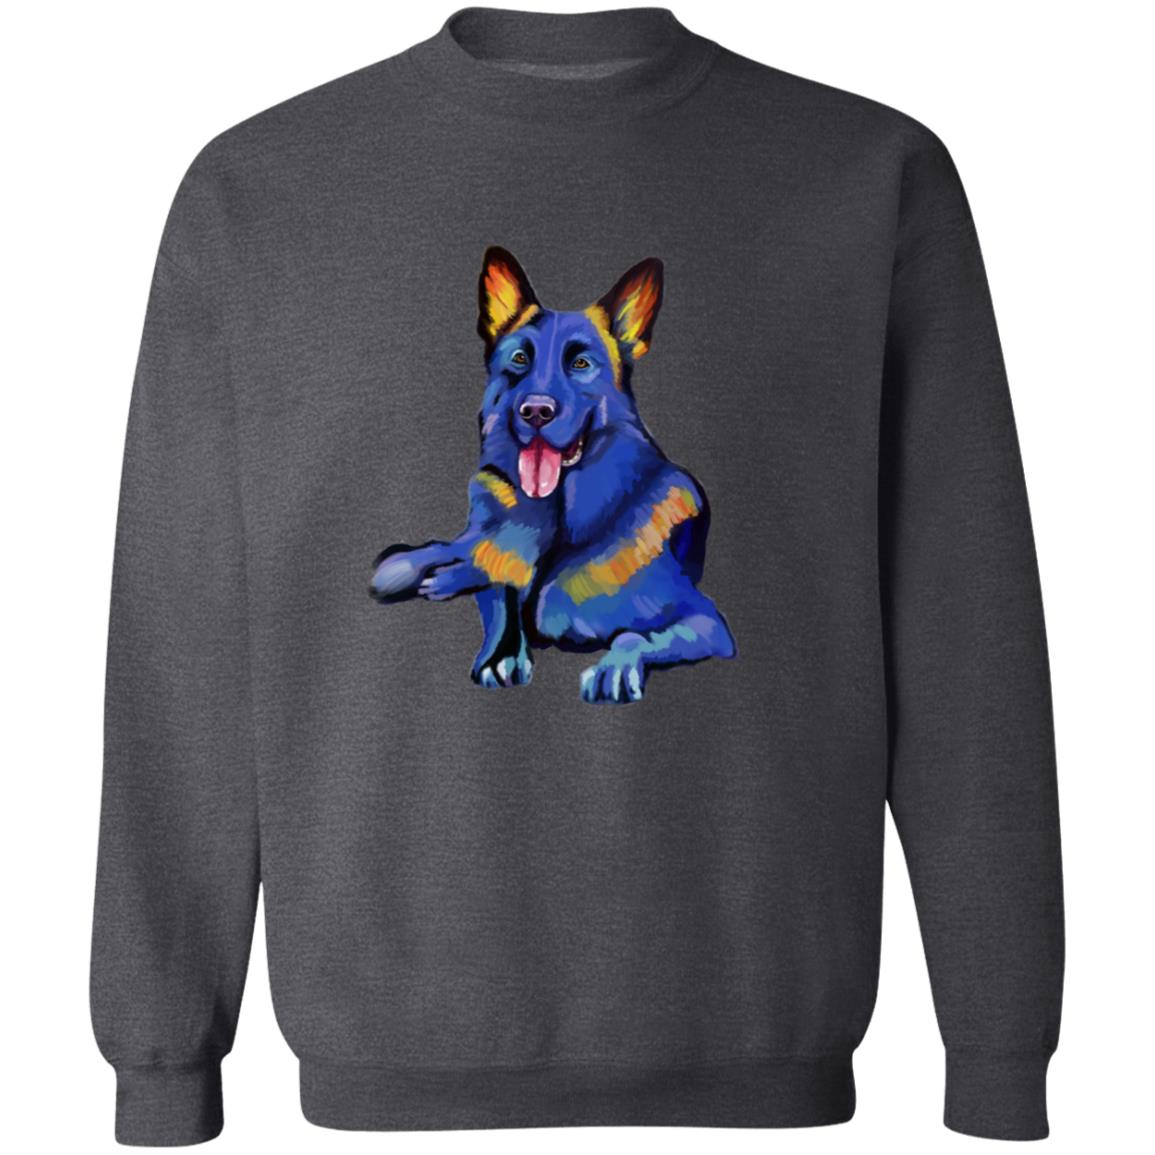 Abstract German Shepherd Dog Unisex Crewneck Sweatshirt with expressive splashes-Family-Gift-Planet